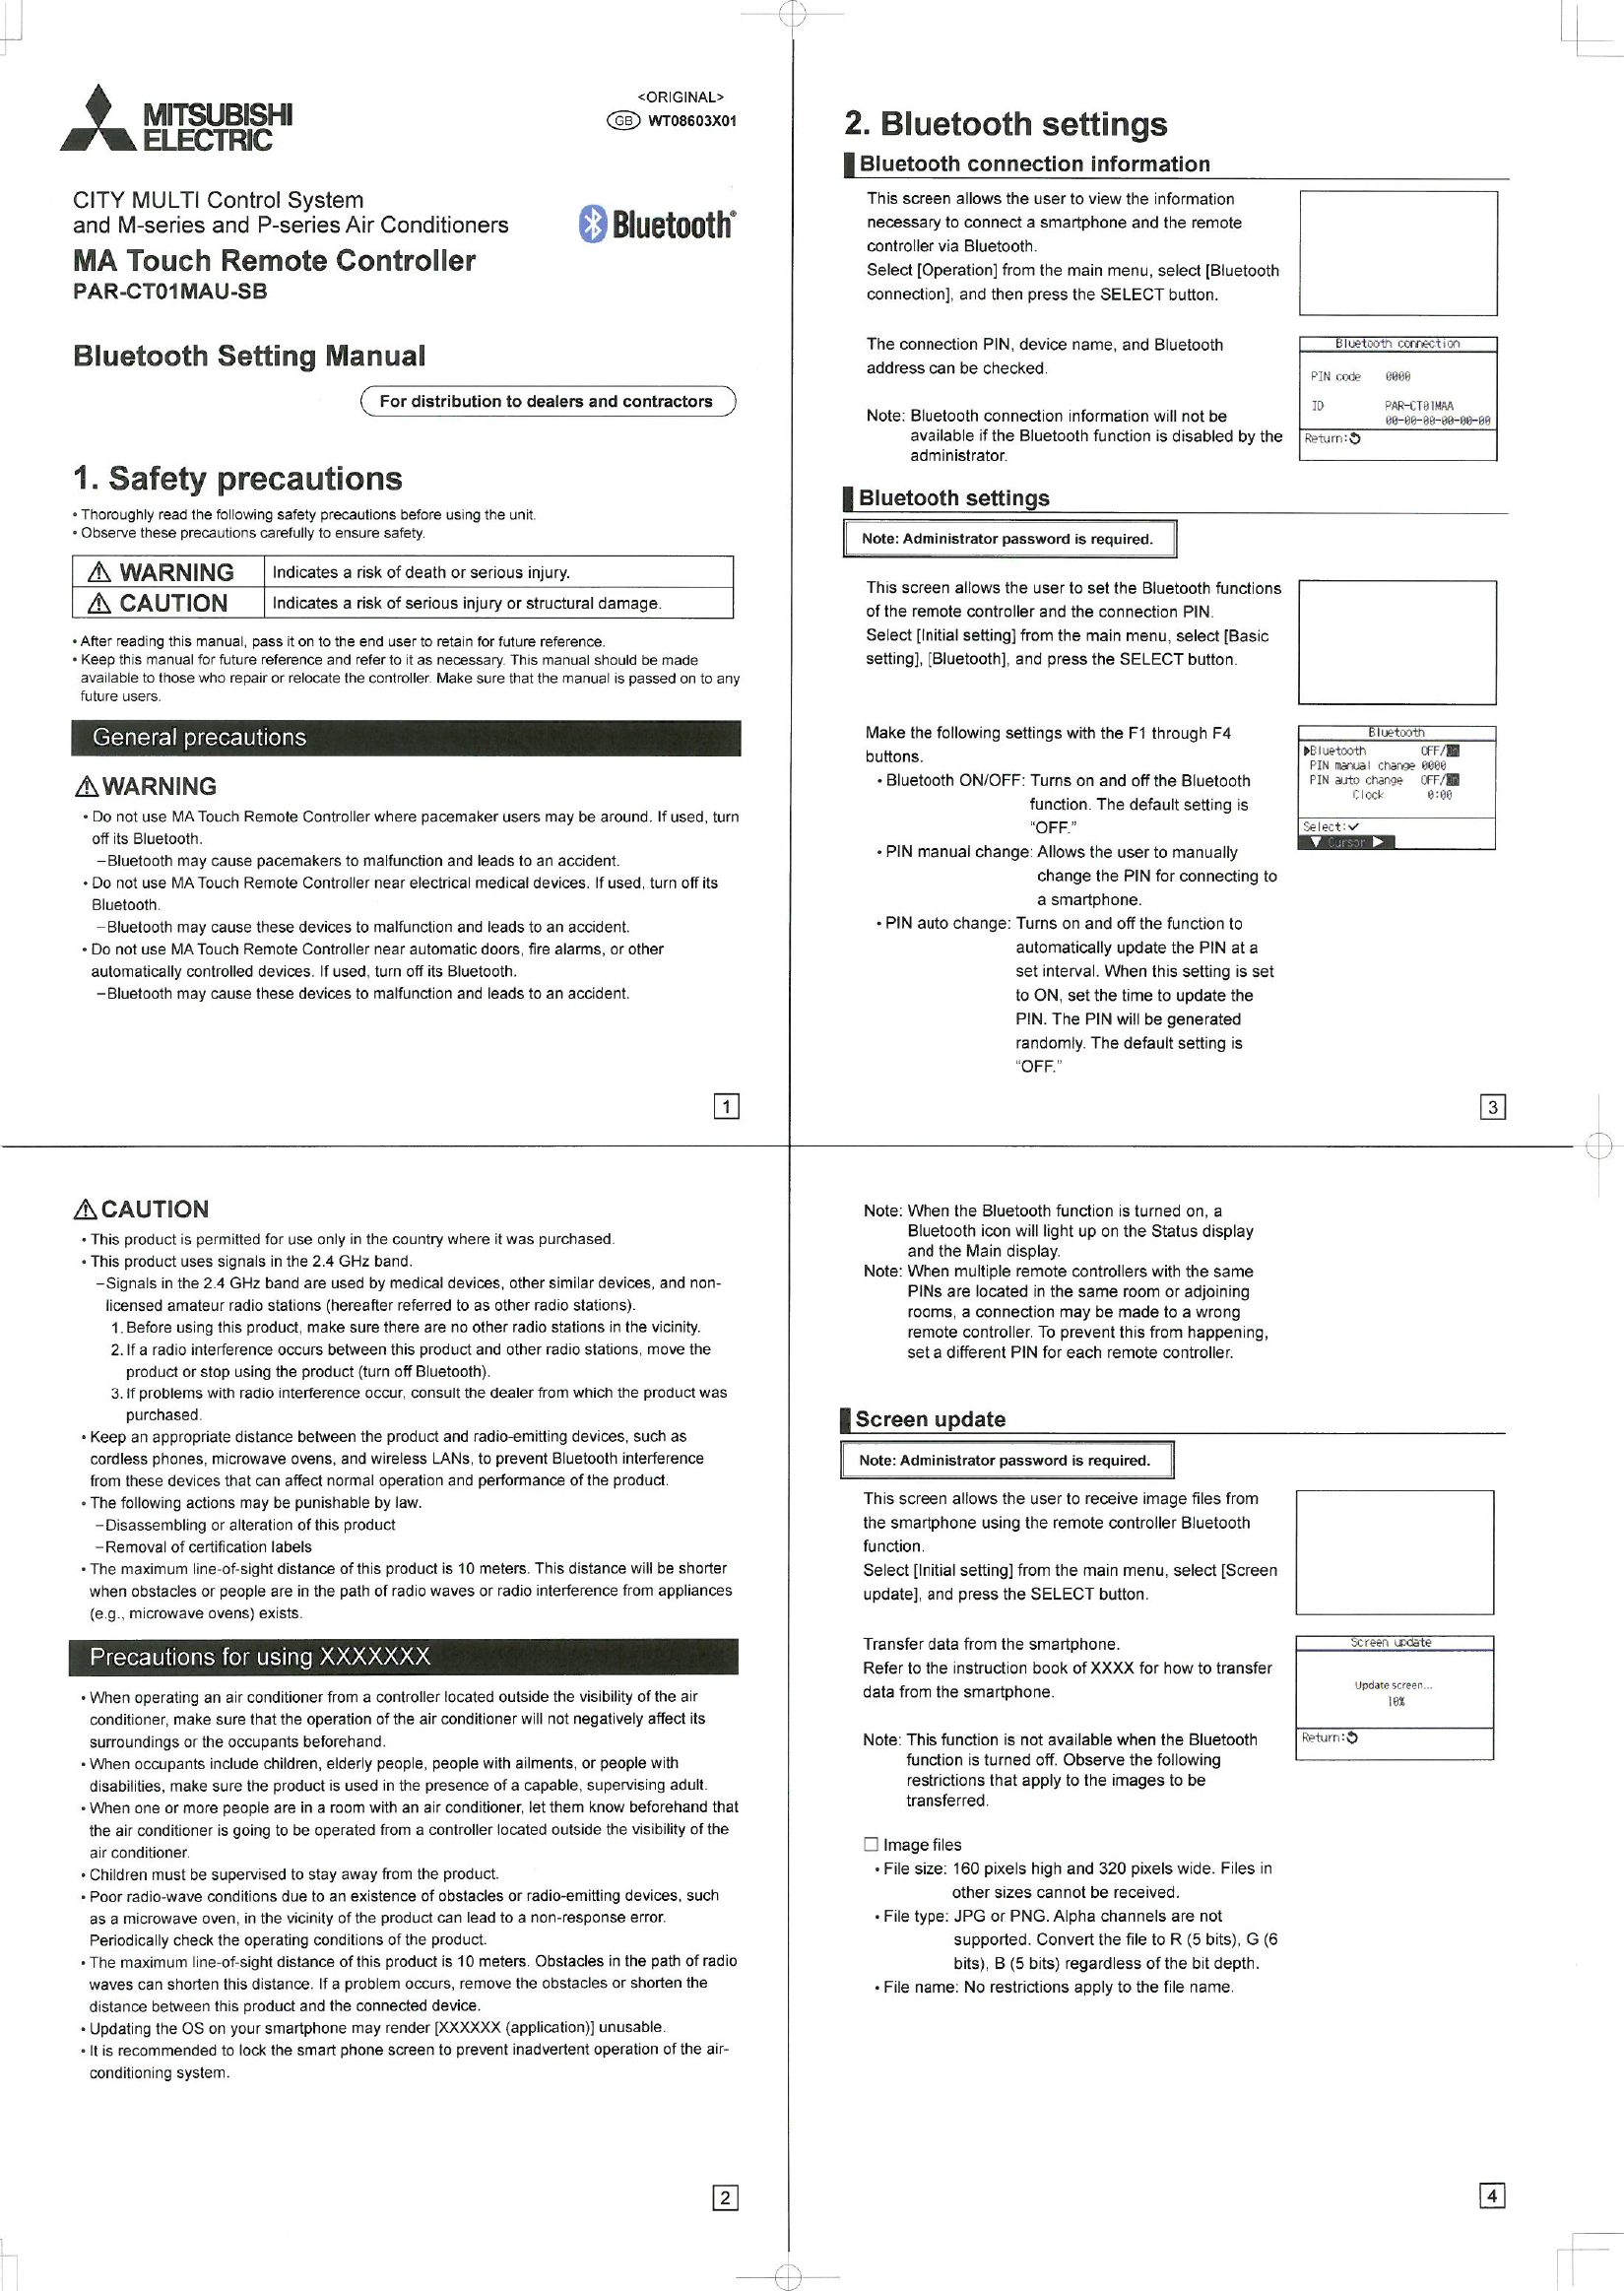 Mitsubishi air conditioner remote rkw502a200 manual